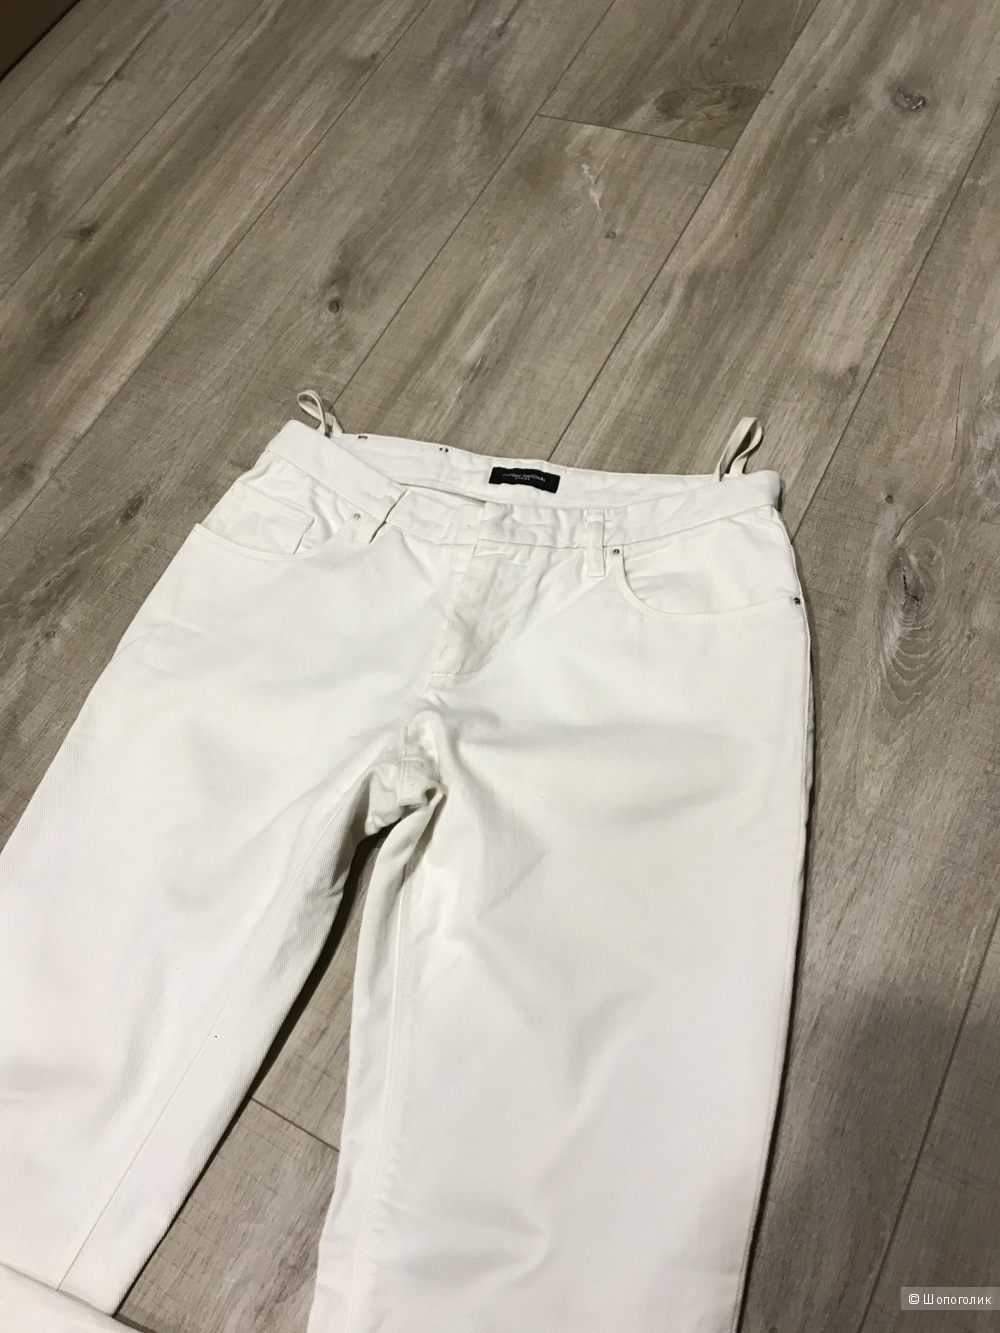 Costume National мужские белые джинсы, 46 IT размер